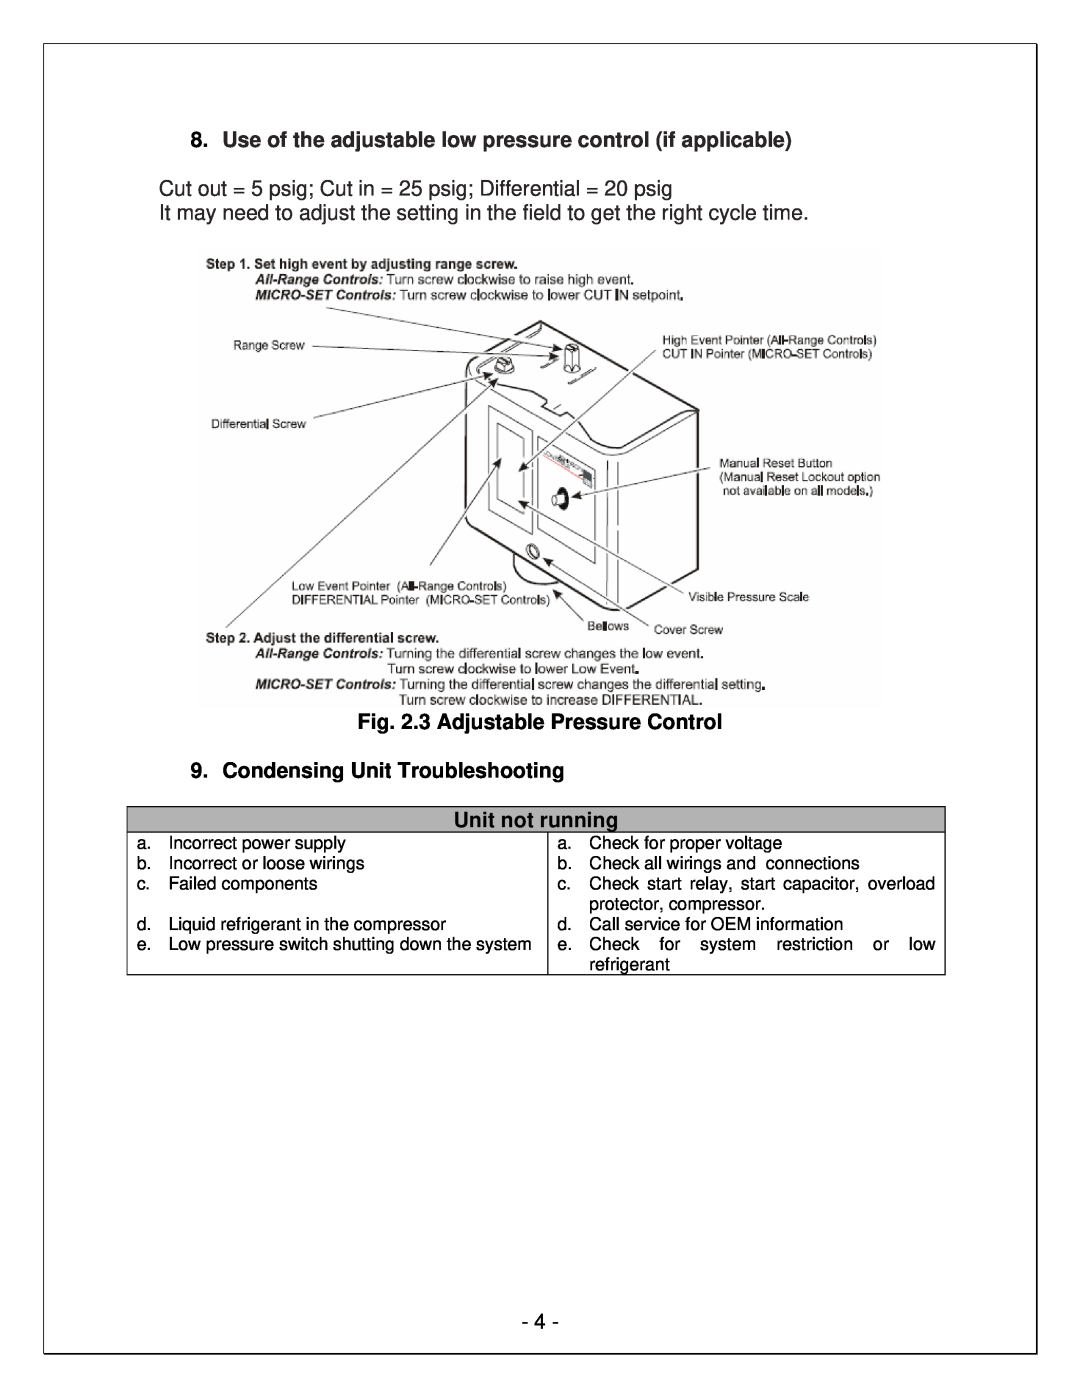 Vinotemp 250SCU manual 3 Adjustable Pressure Control, Condensing Unit Troubleshooting, Unit not running 